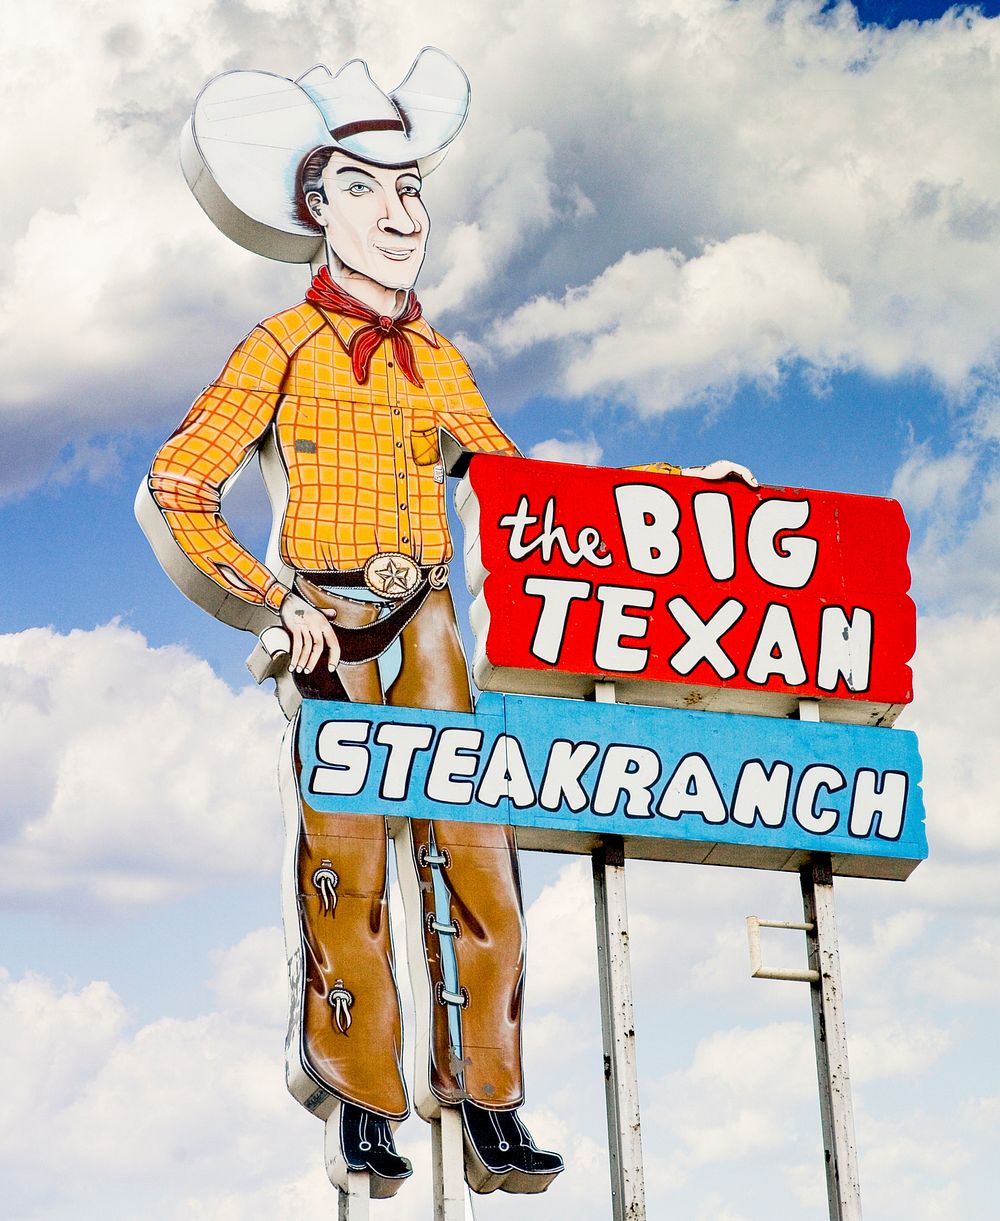 The Big Texan Steak Ranch restaurant sign in Amarillo, Texas. Original image from Carol M. Highsmith&rsquo;s America…